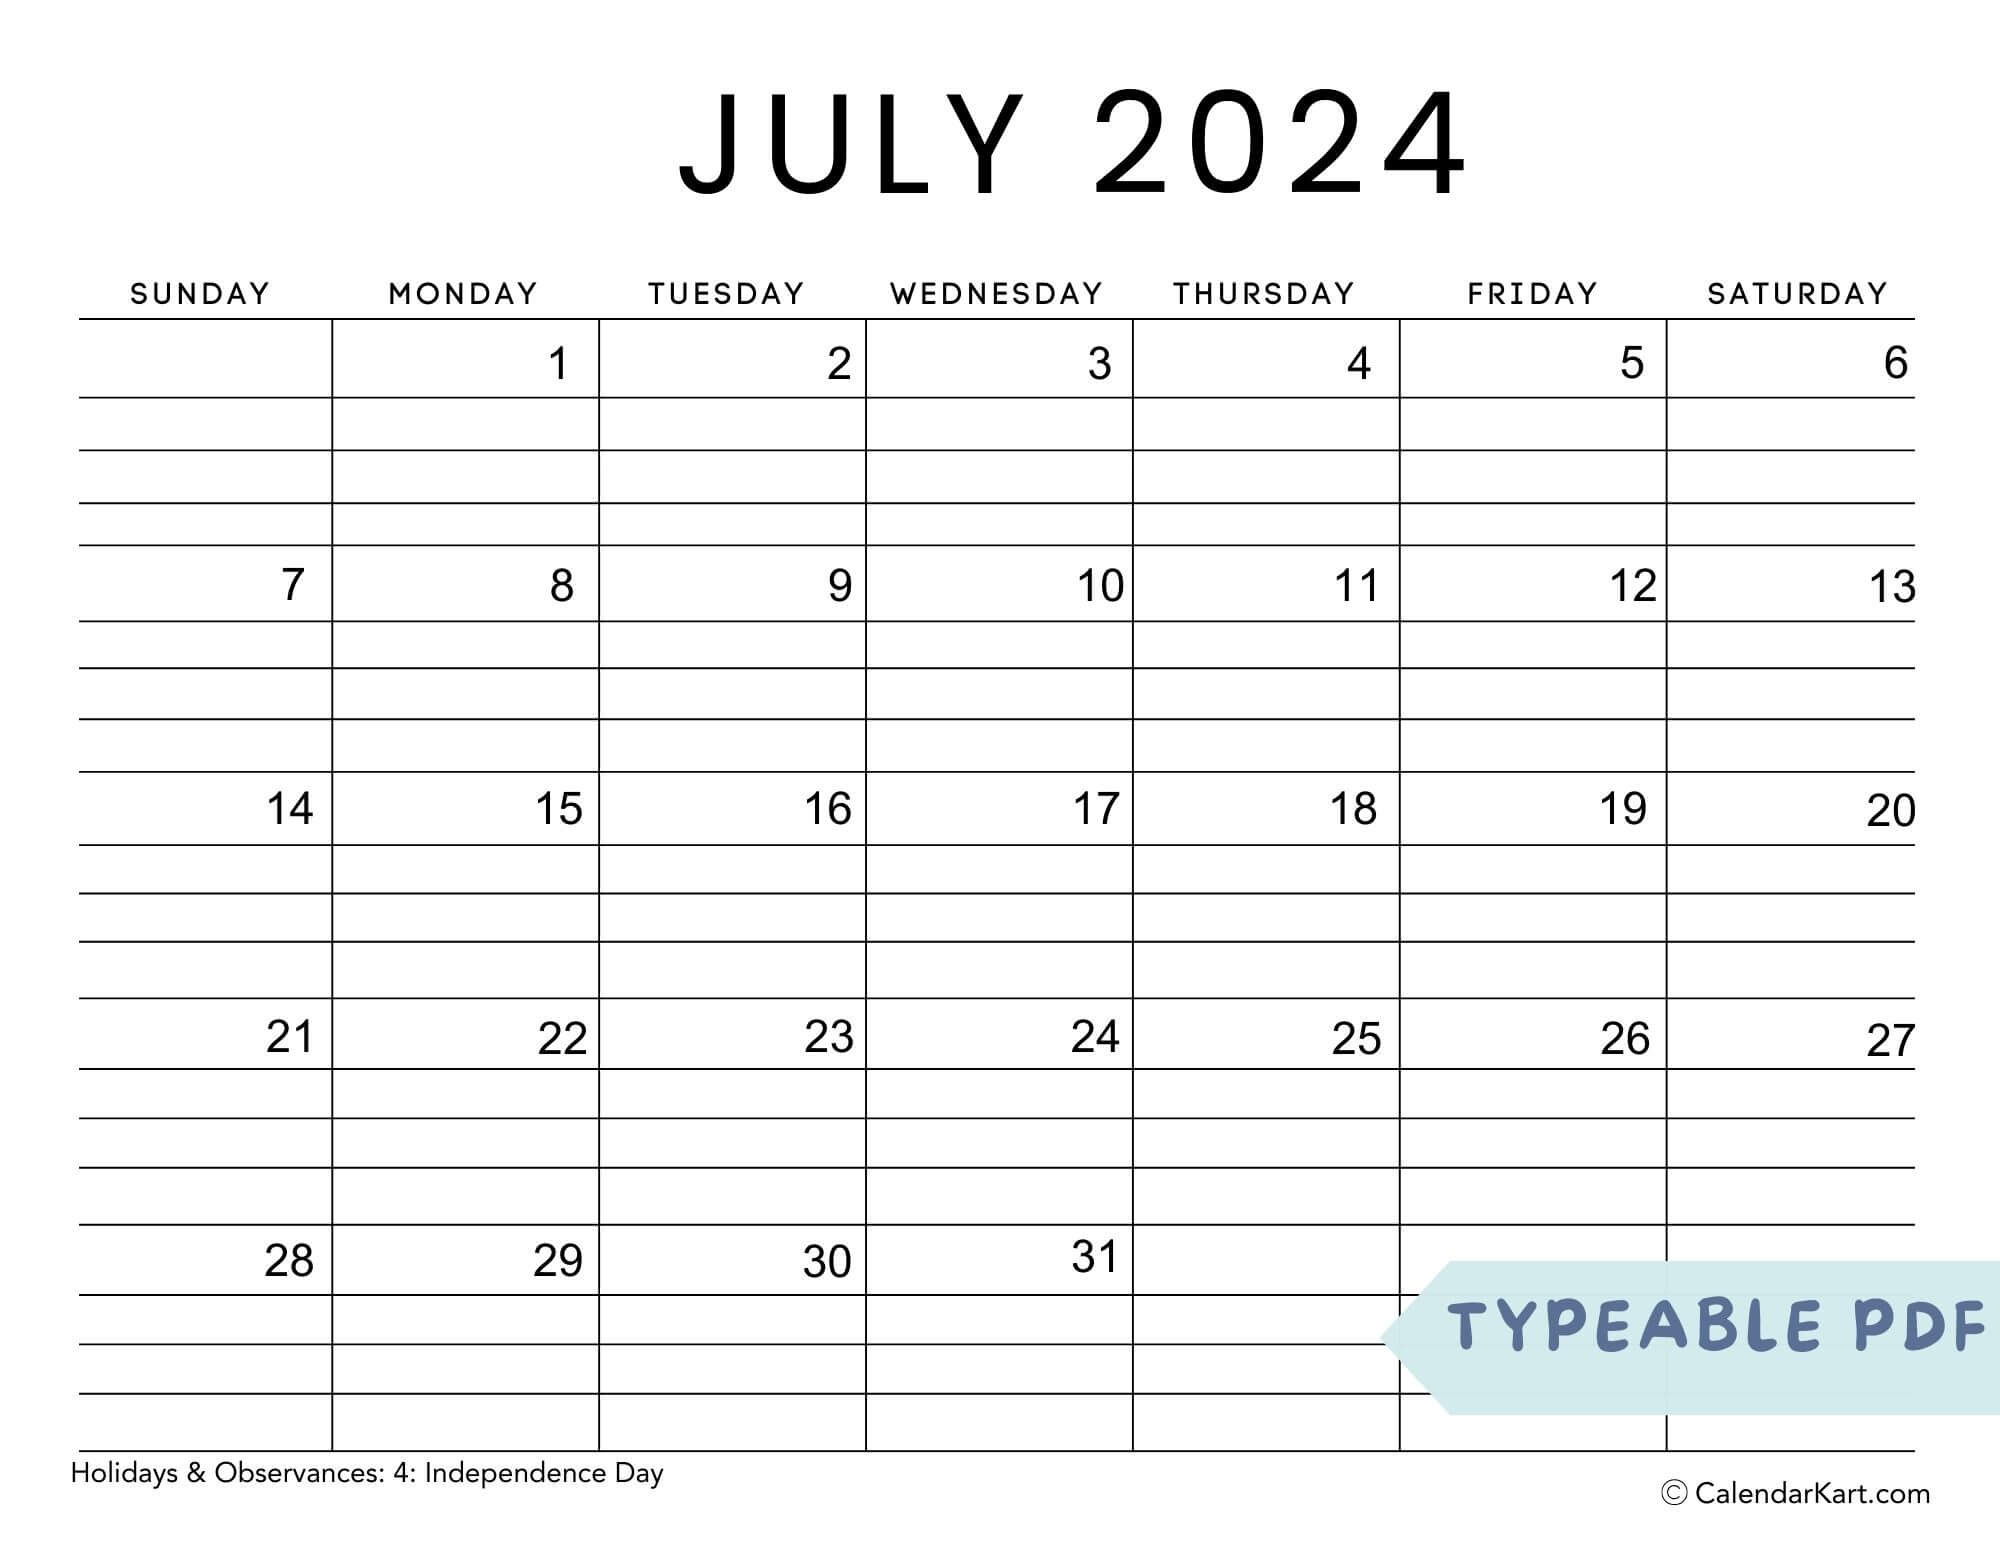 Get Free Printable July 2024 Calendar - Calendarkart with regard to 16 Month Calendar Starting July 2024